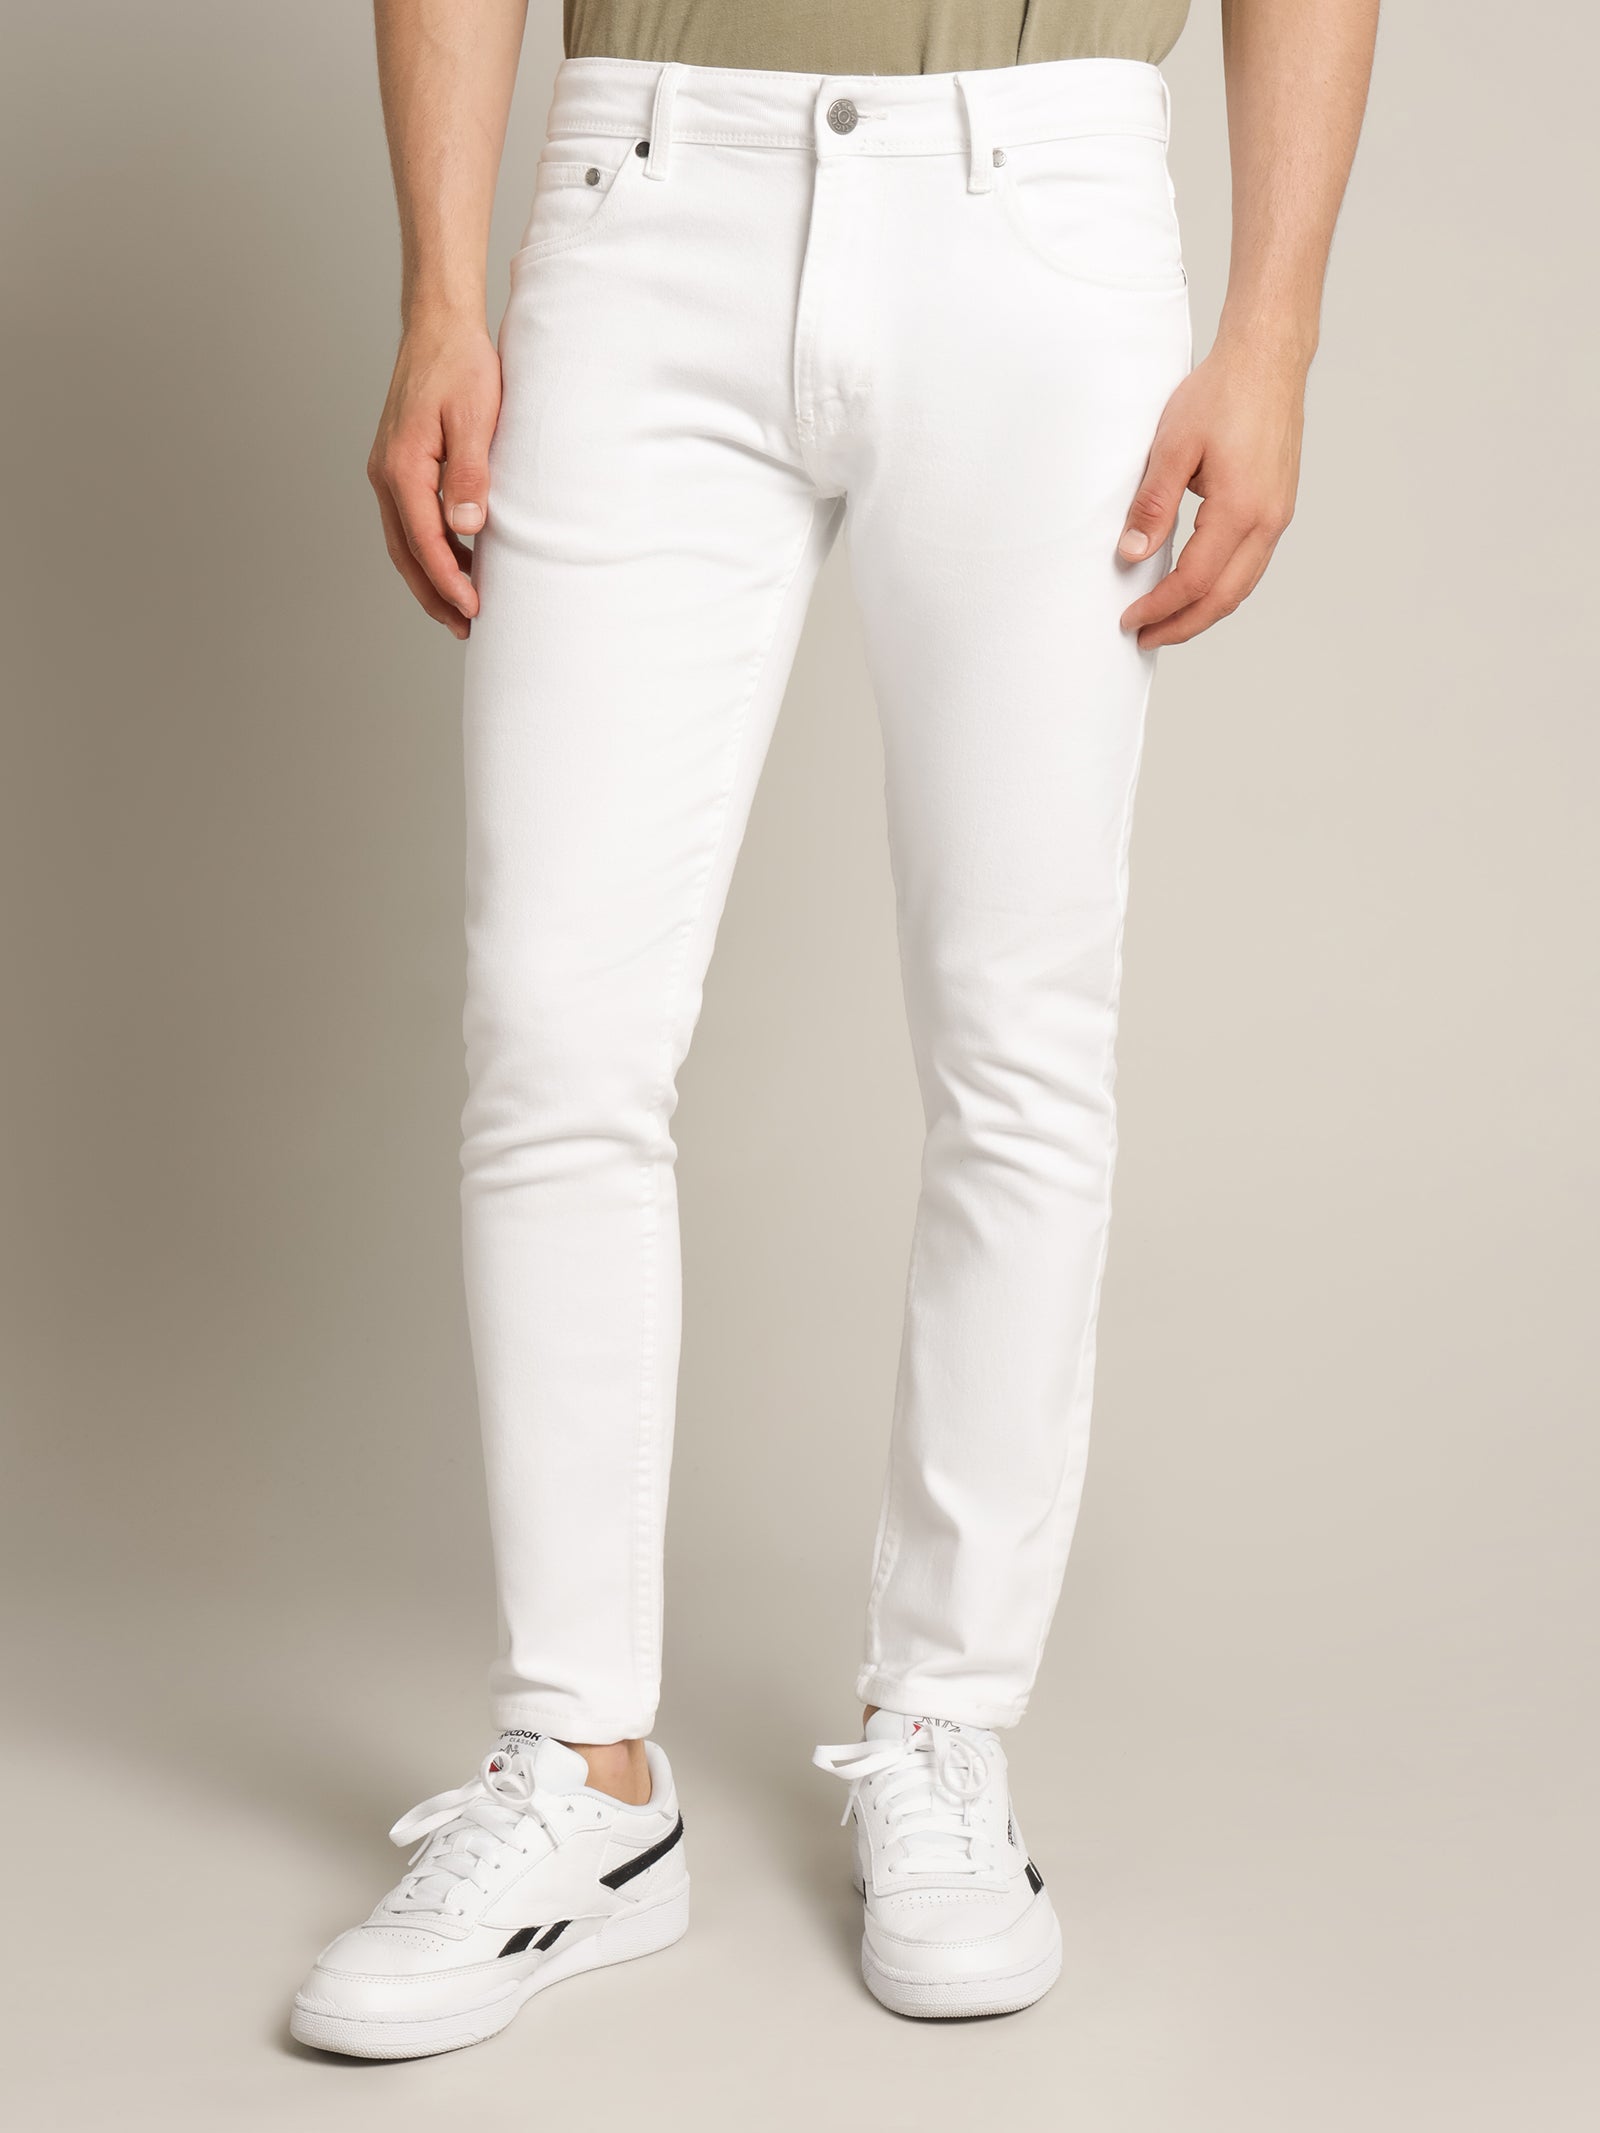 Zane Skinny Jeans in White - Glue Store